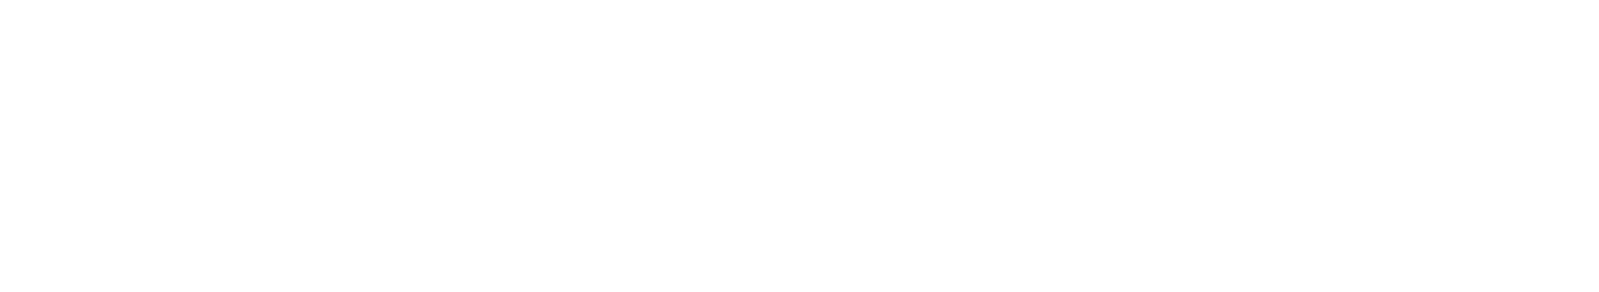 Eaton Vance Logo groß für dunkle Hintergründe (transparentes PNG)